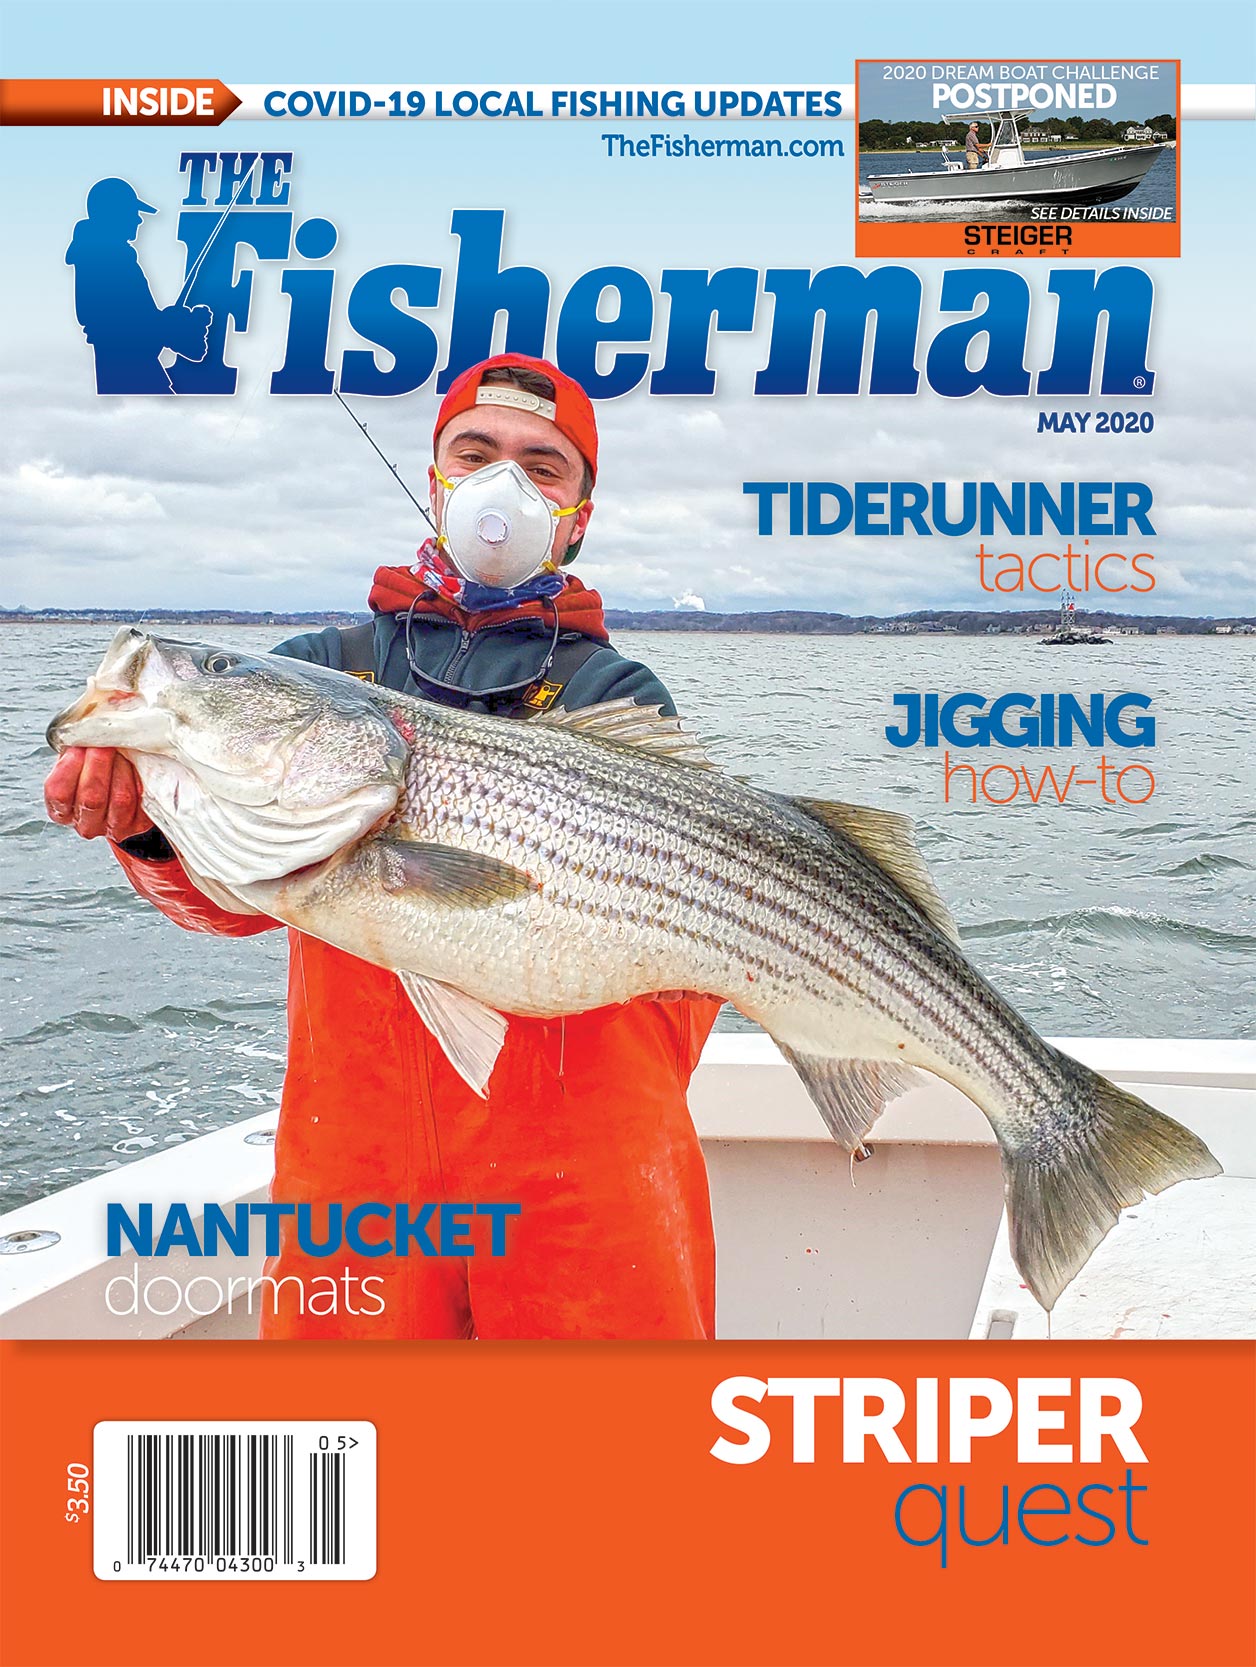 https://www.thefisherman.com/wp-content/uploads/2020/04/2020-05-fisherman-glossy-cover.jpg